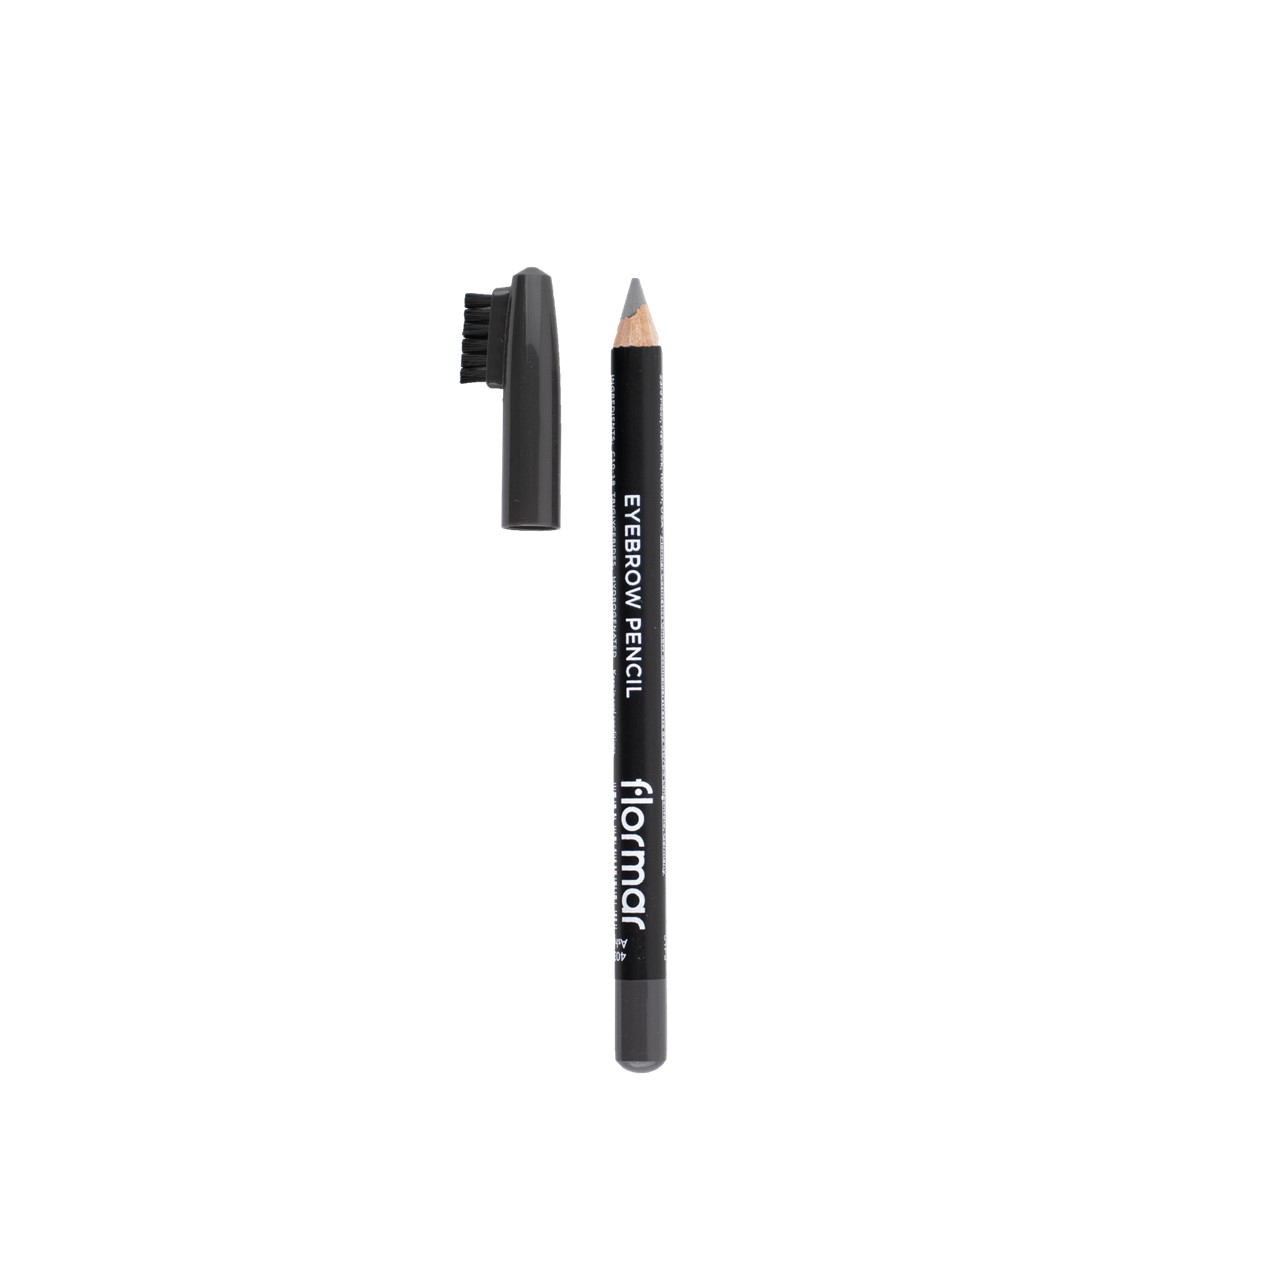 Flormar Eyebrow Pencil 403 Ashy 0.35g (0.01oz)